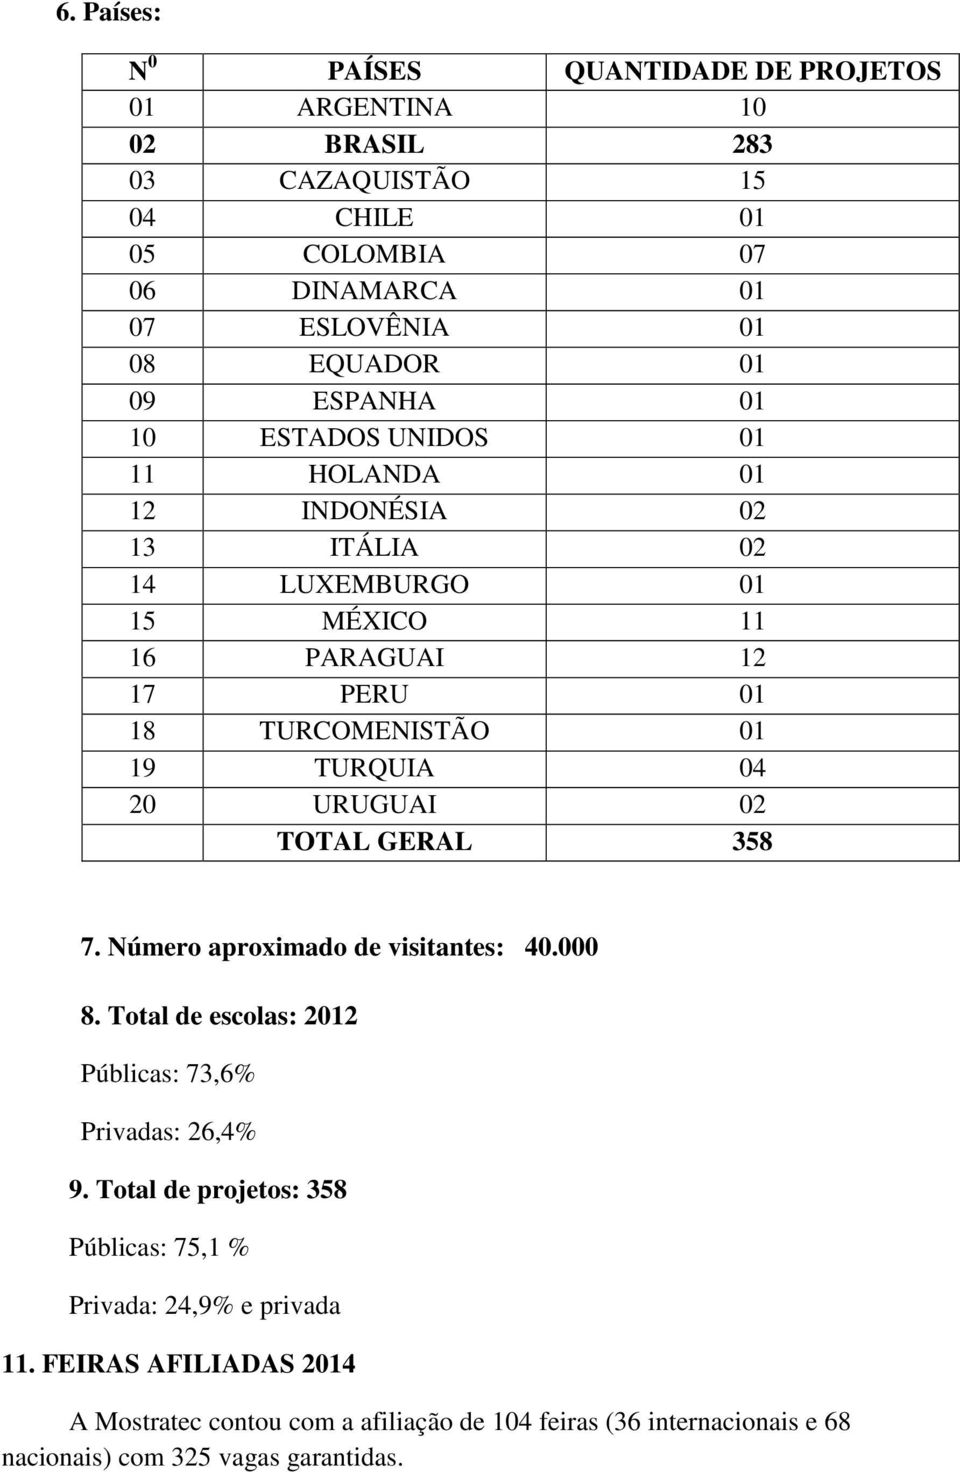 04 20 URUGUAI 02 TOTAL GERAL 358 7. Número aproximado de visitantes: 40.000 8. Total de escolas: 2012 Públicas: 73,6% Privadas: 26,4% 9.